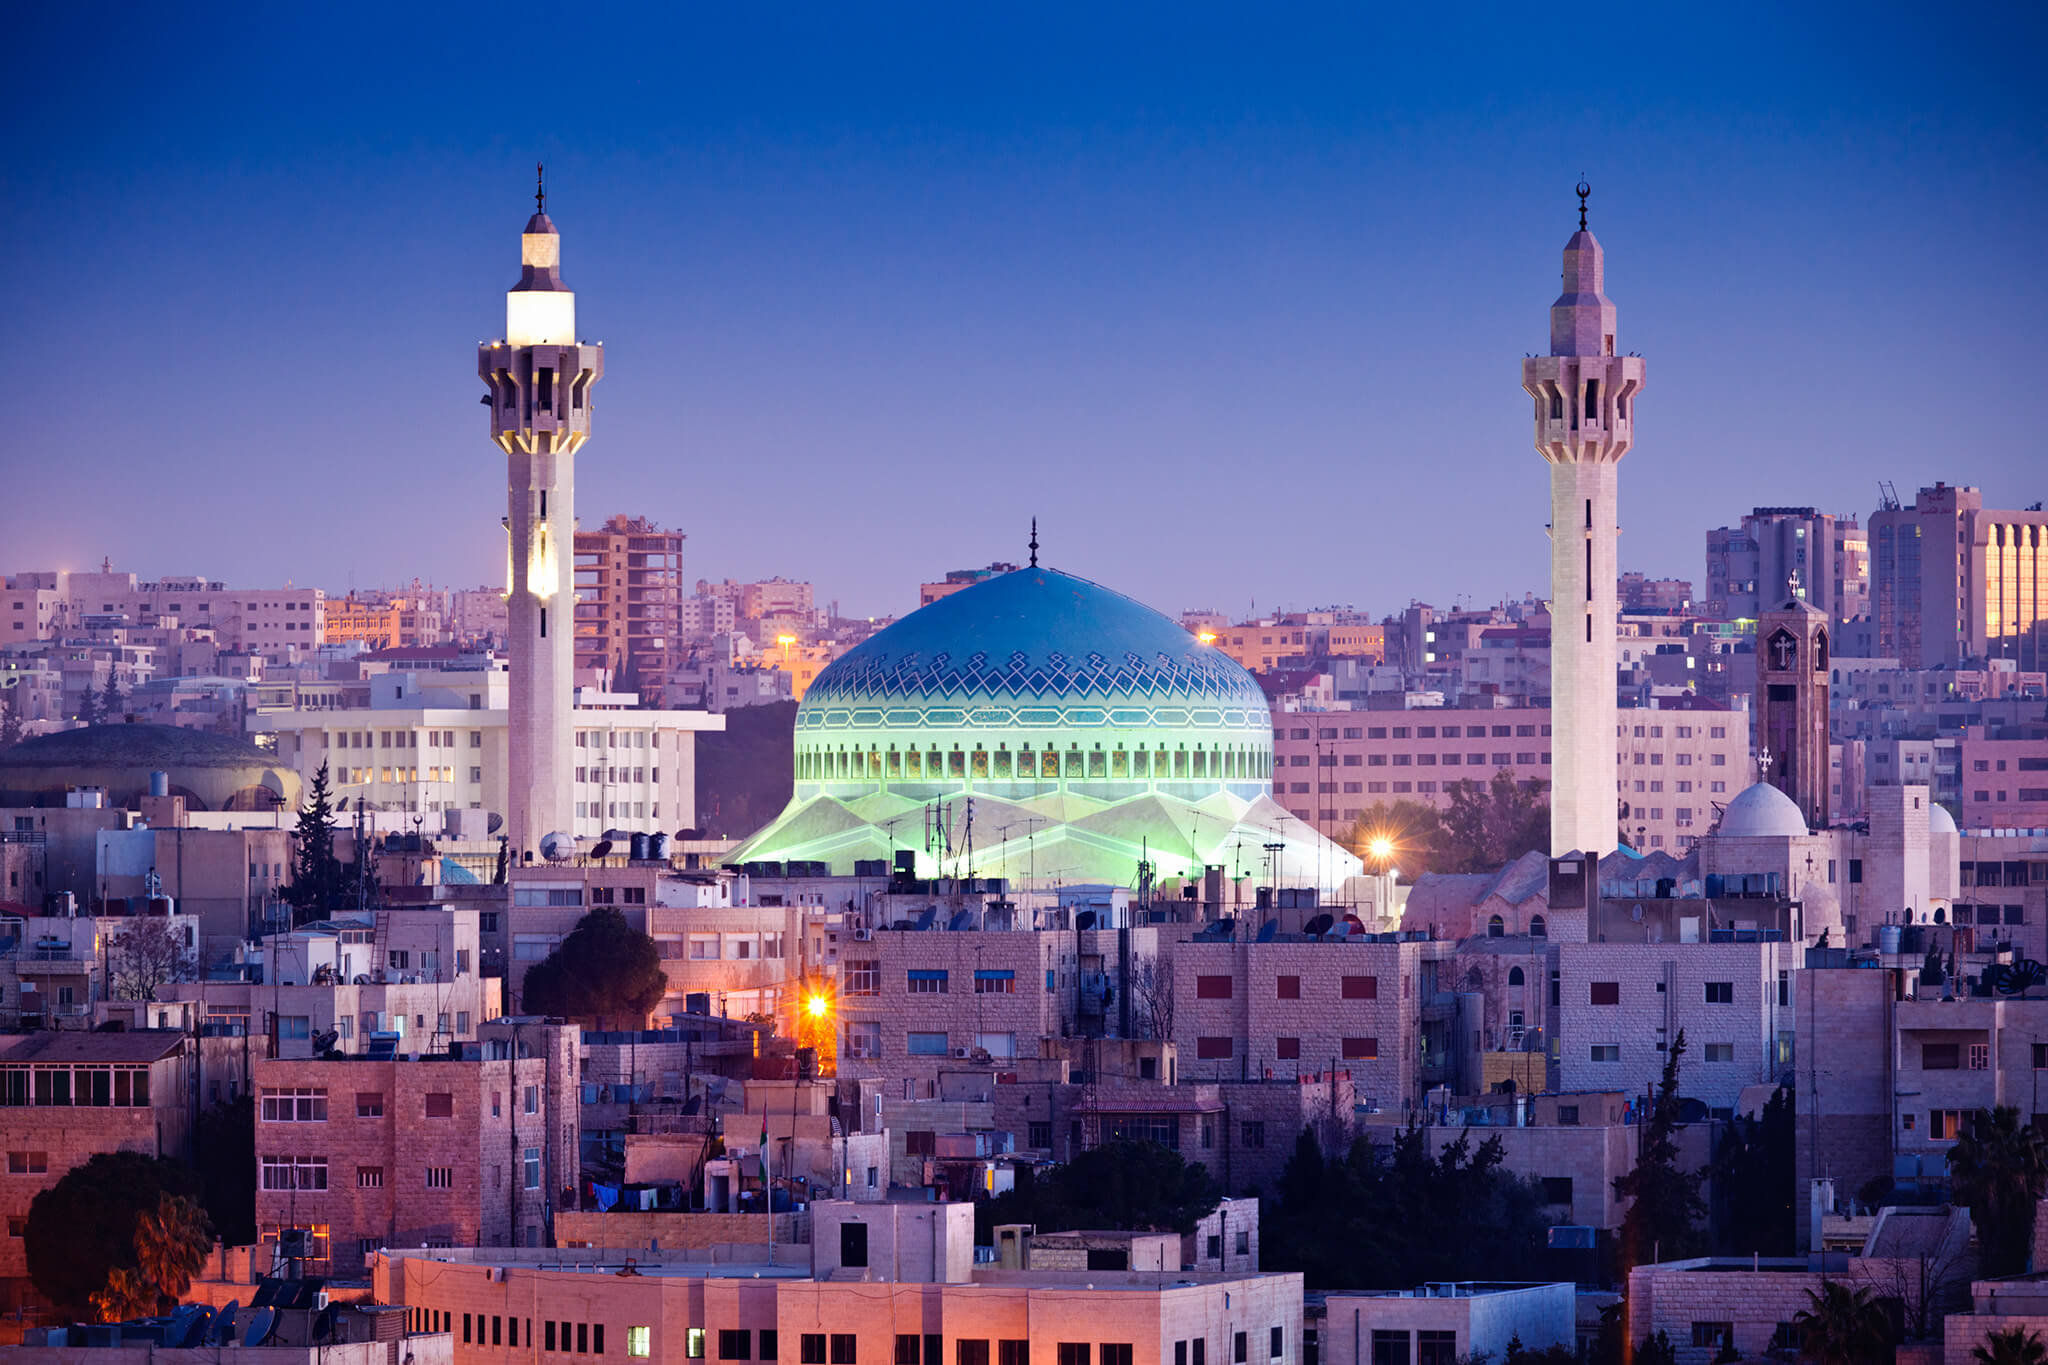 Ürdün'ün Başkenti Amman 'ı Tanıyalım